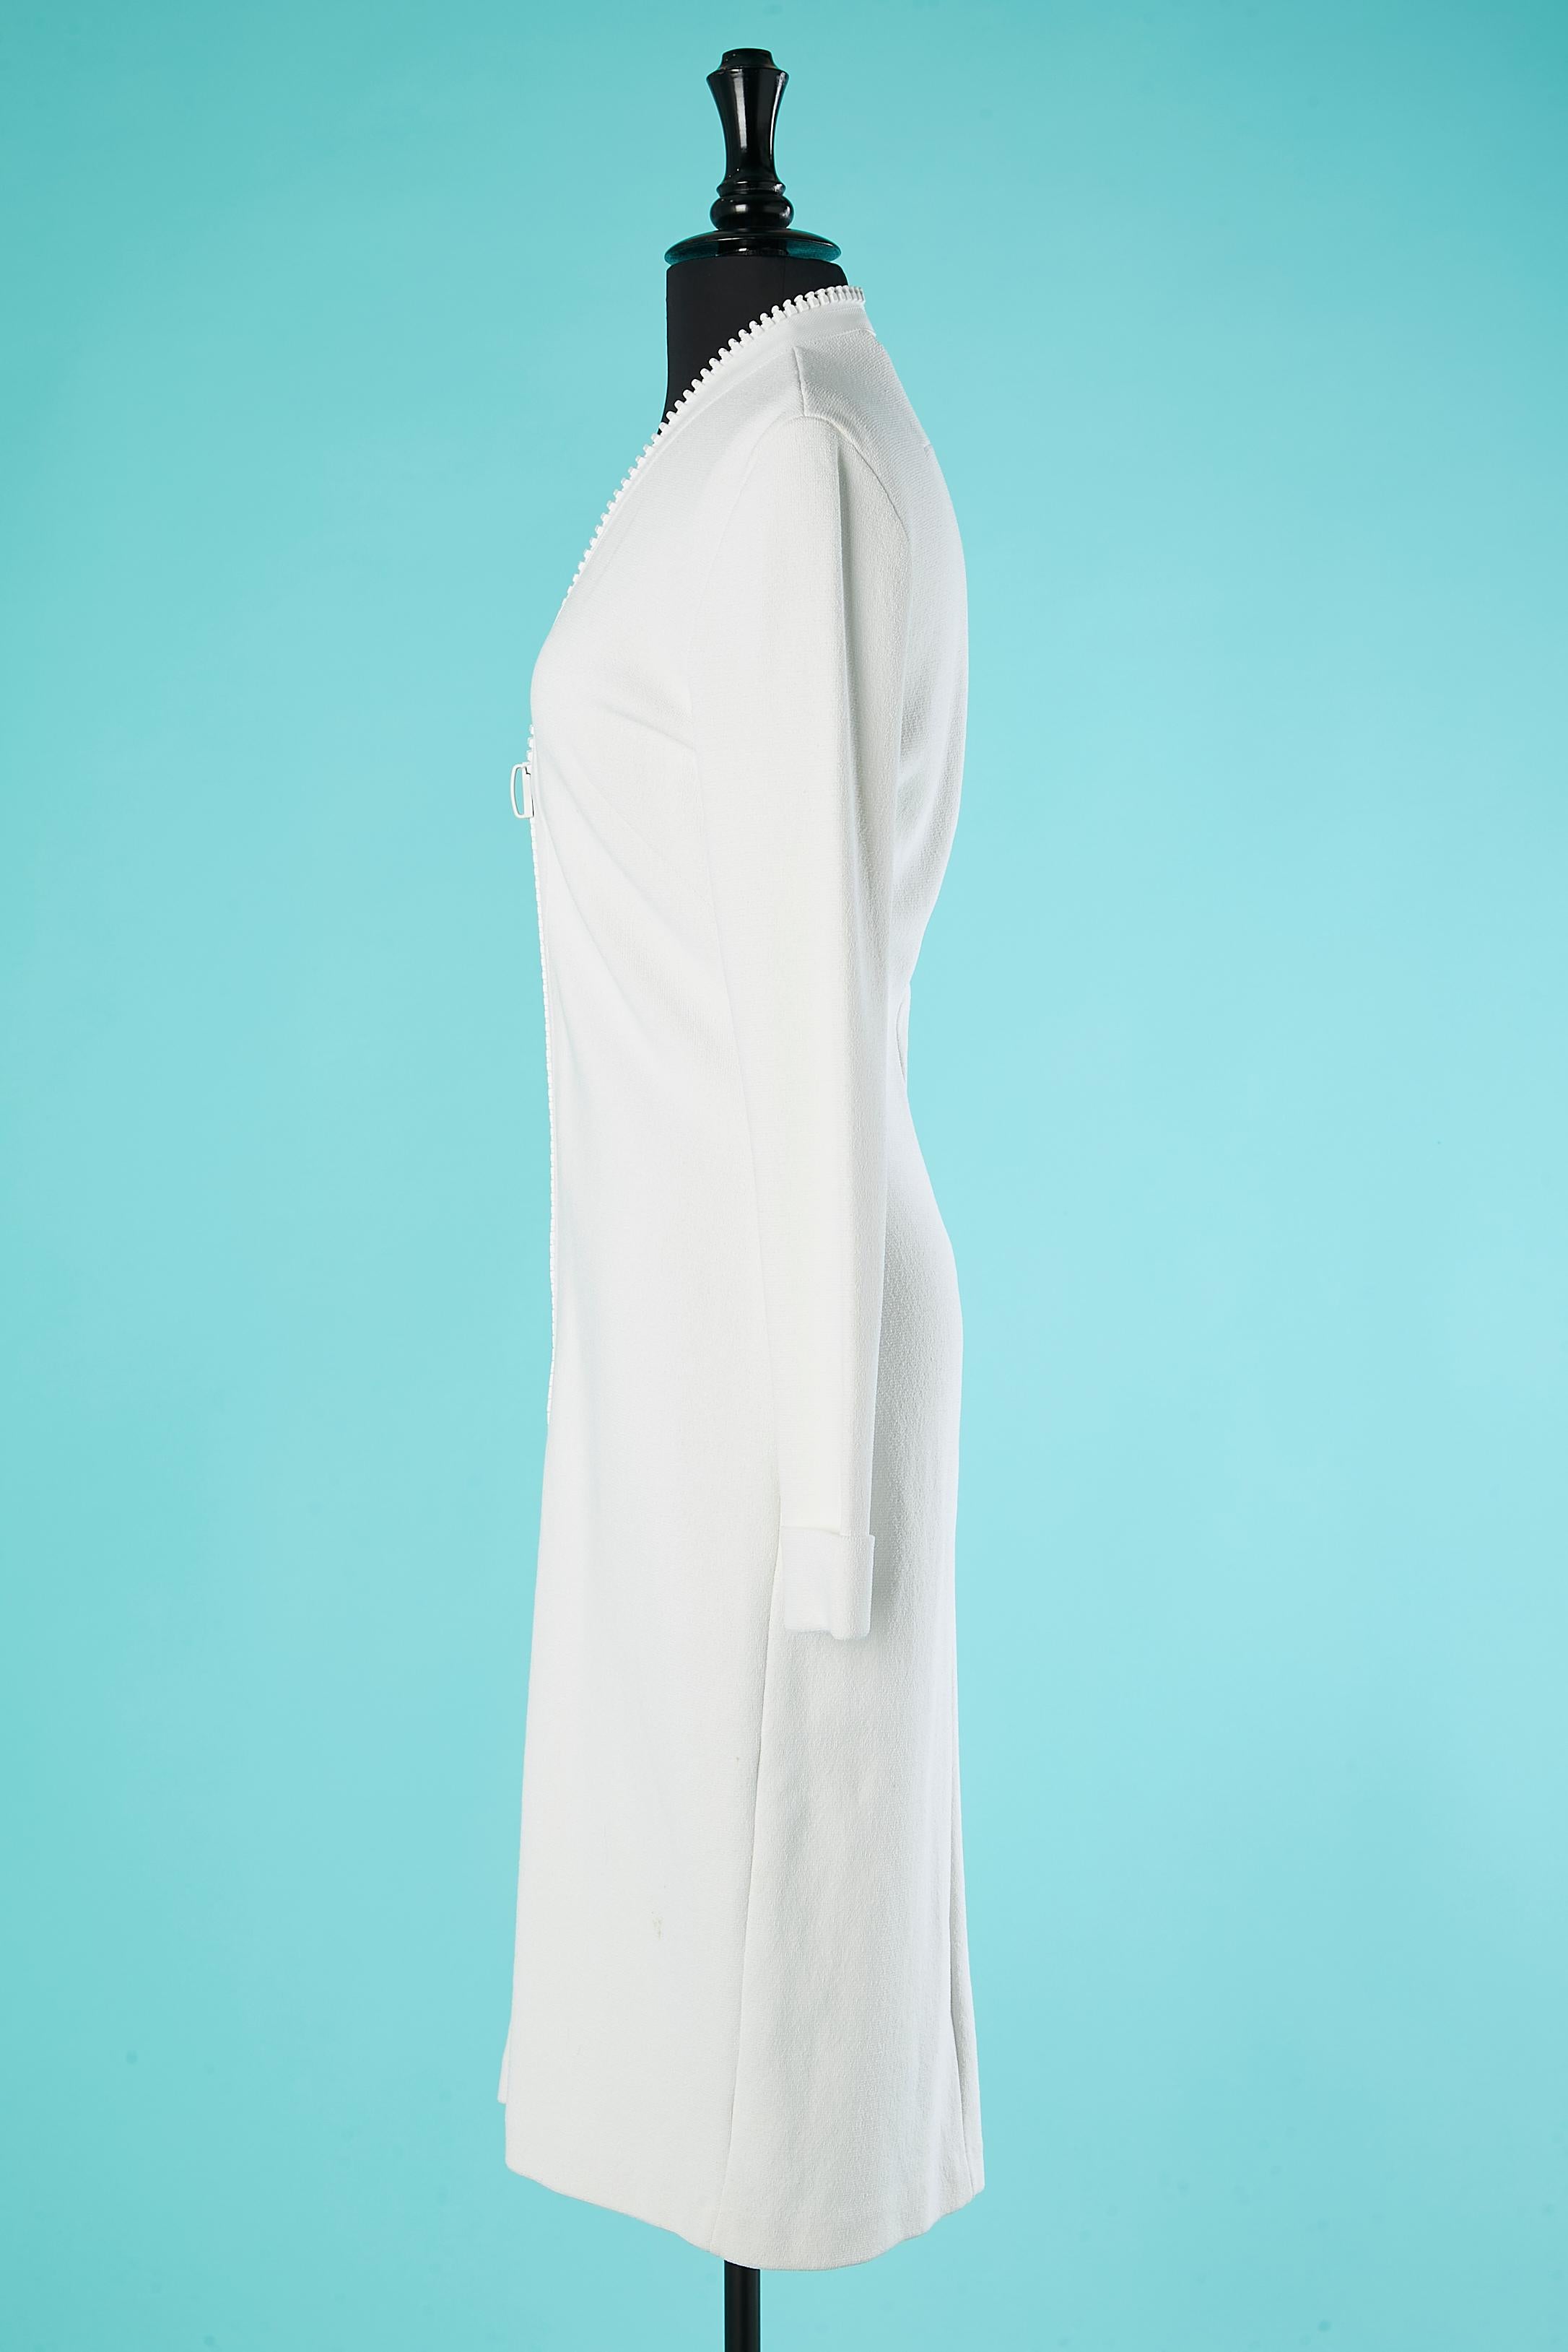 Gris Robe blanche surdimensionnée Givenchy par Ricardo Tisci, printemps 2016 en vente